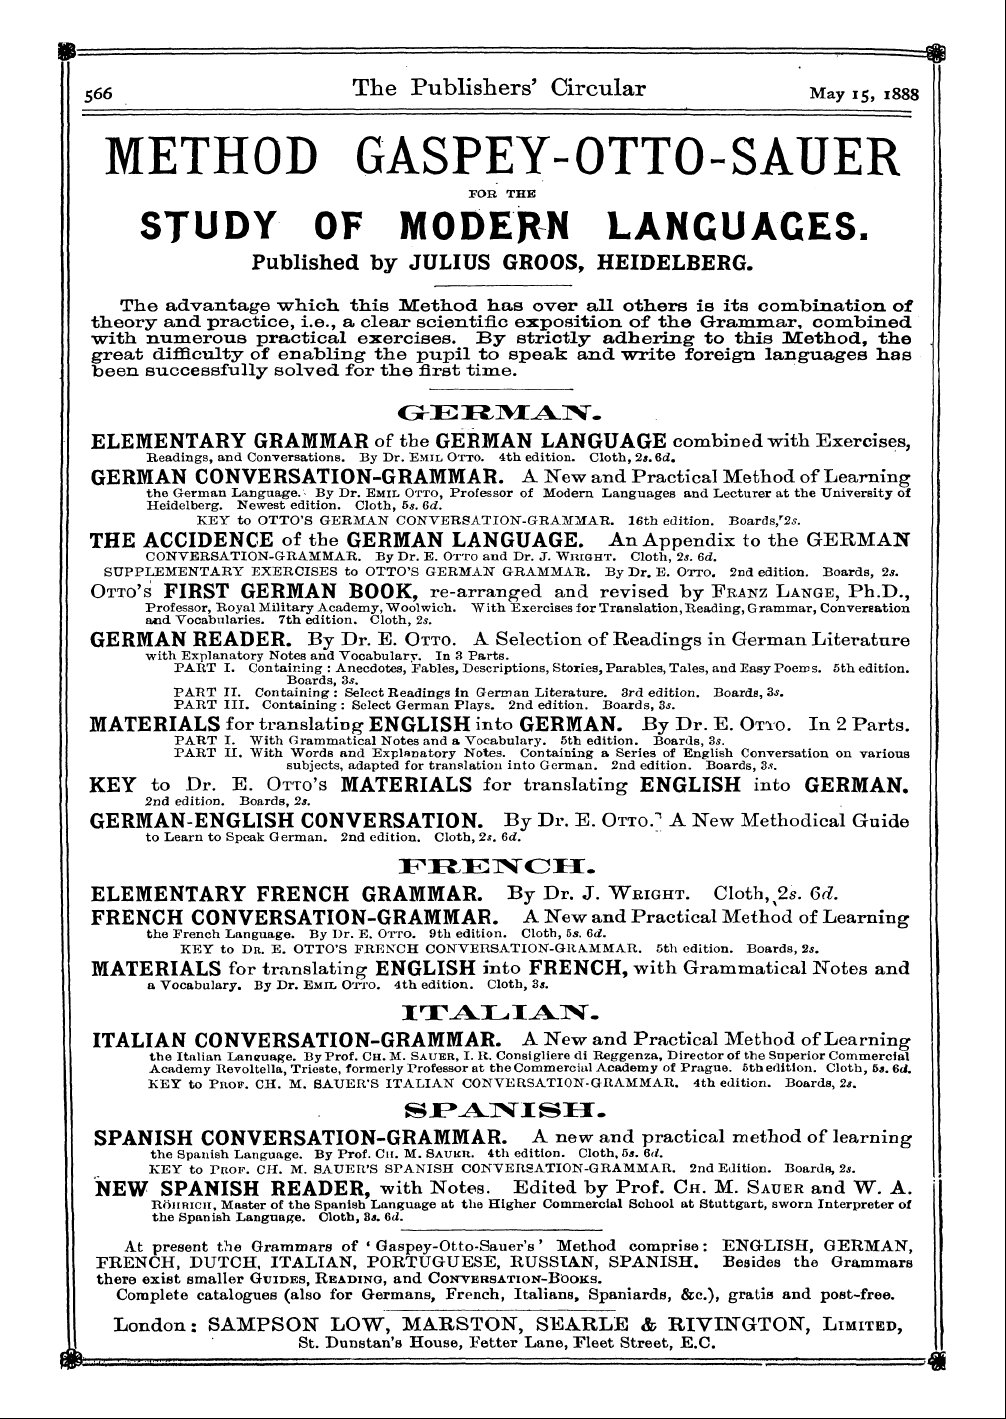 Publishers’ Circular (1880-1890): jS F Y, 1st edition: 68